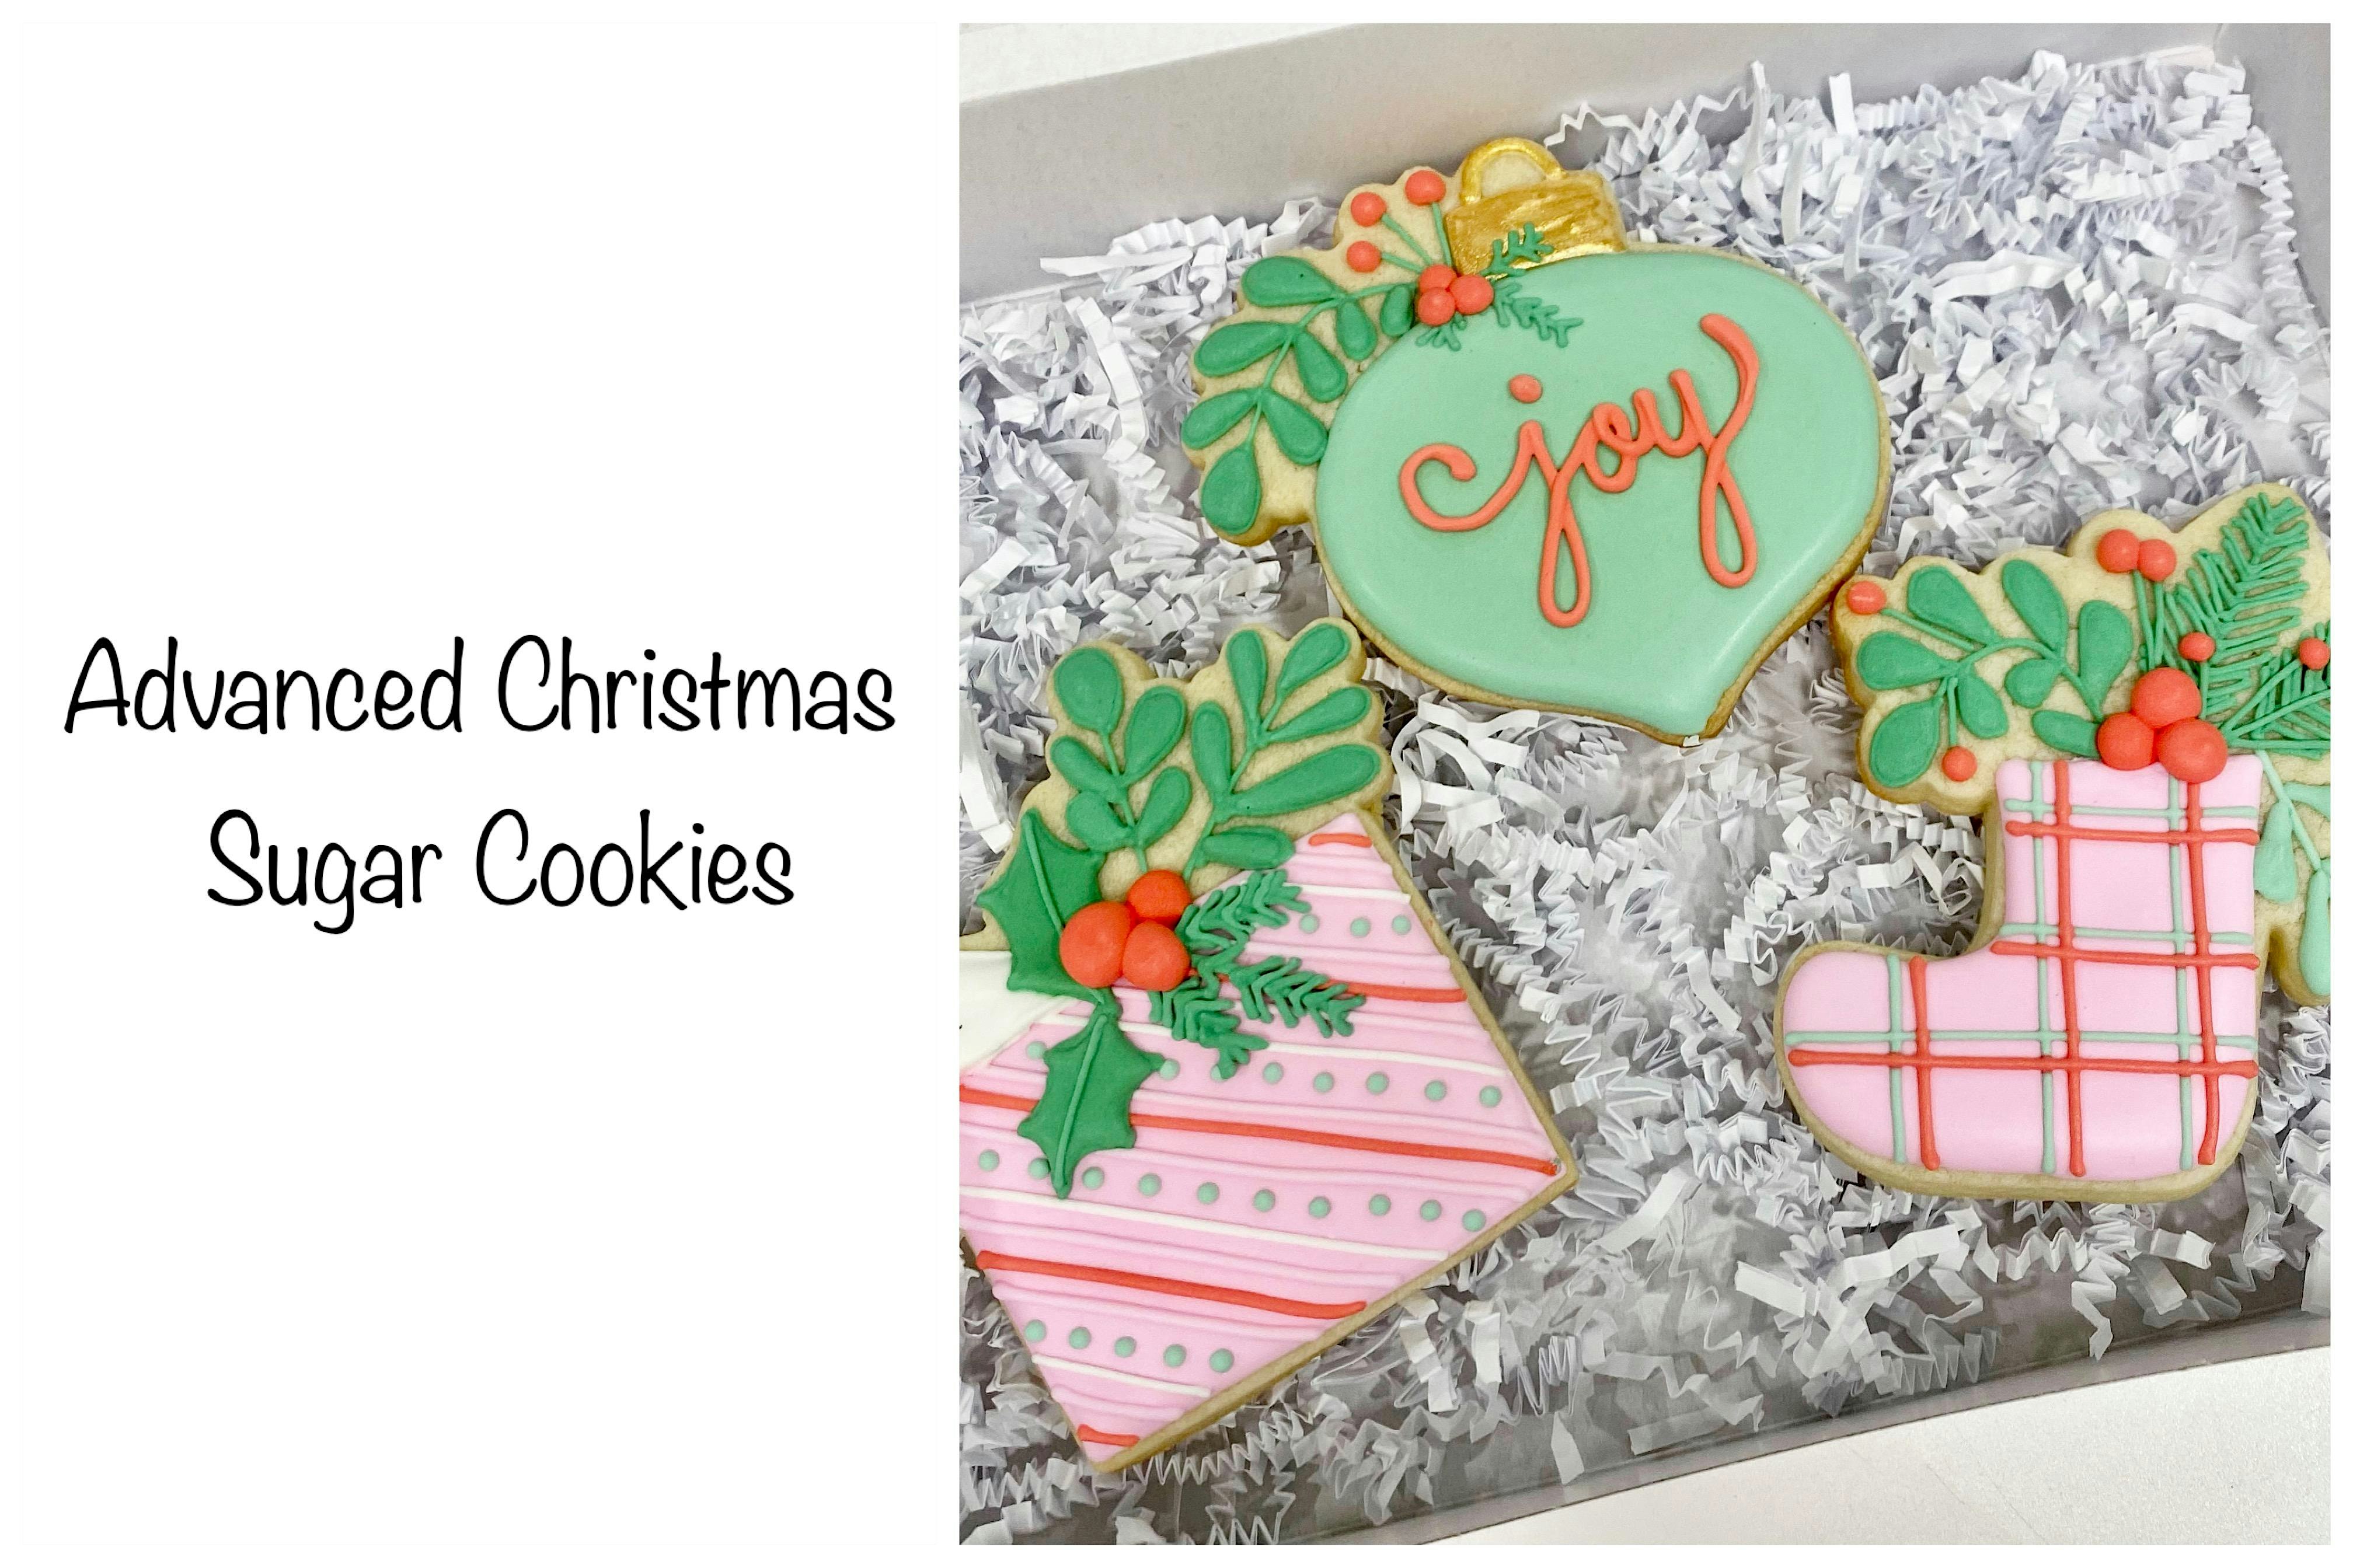 Advanced Christmas Sugar Cookie Decorating Class